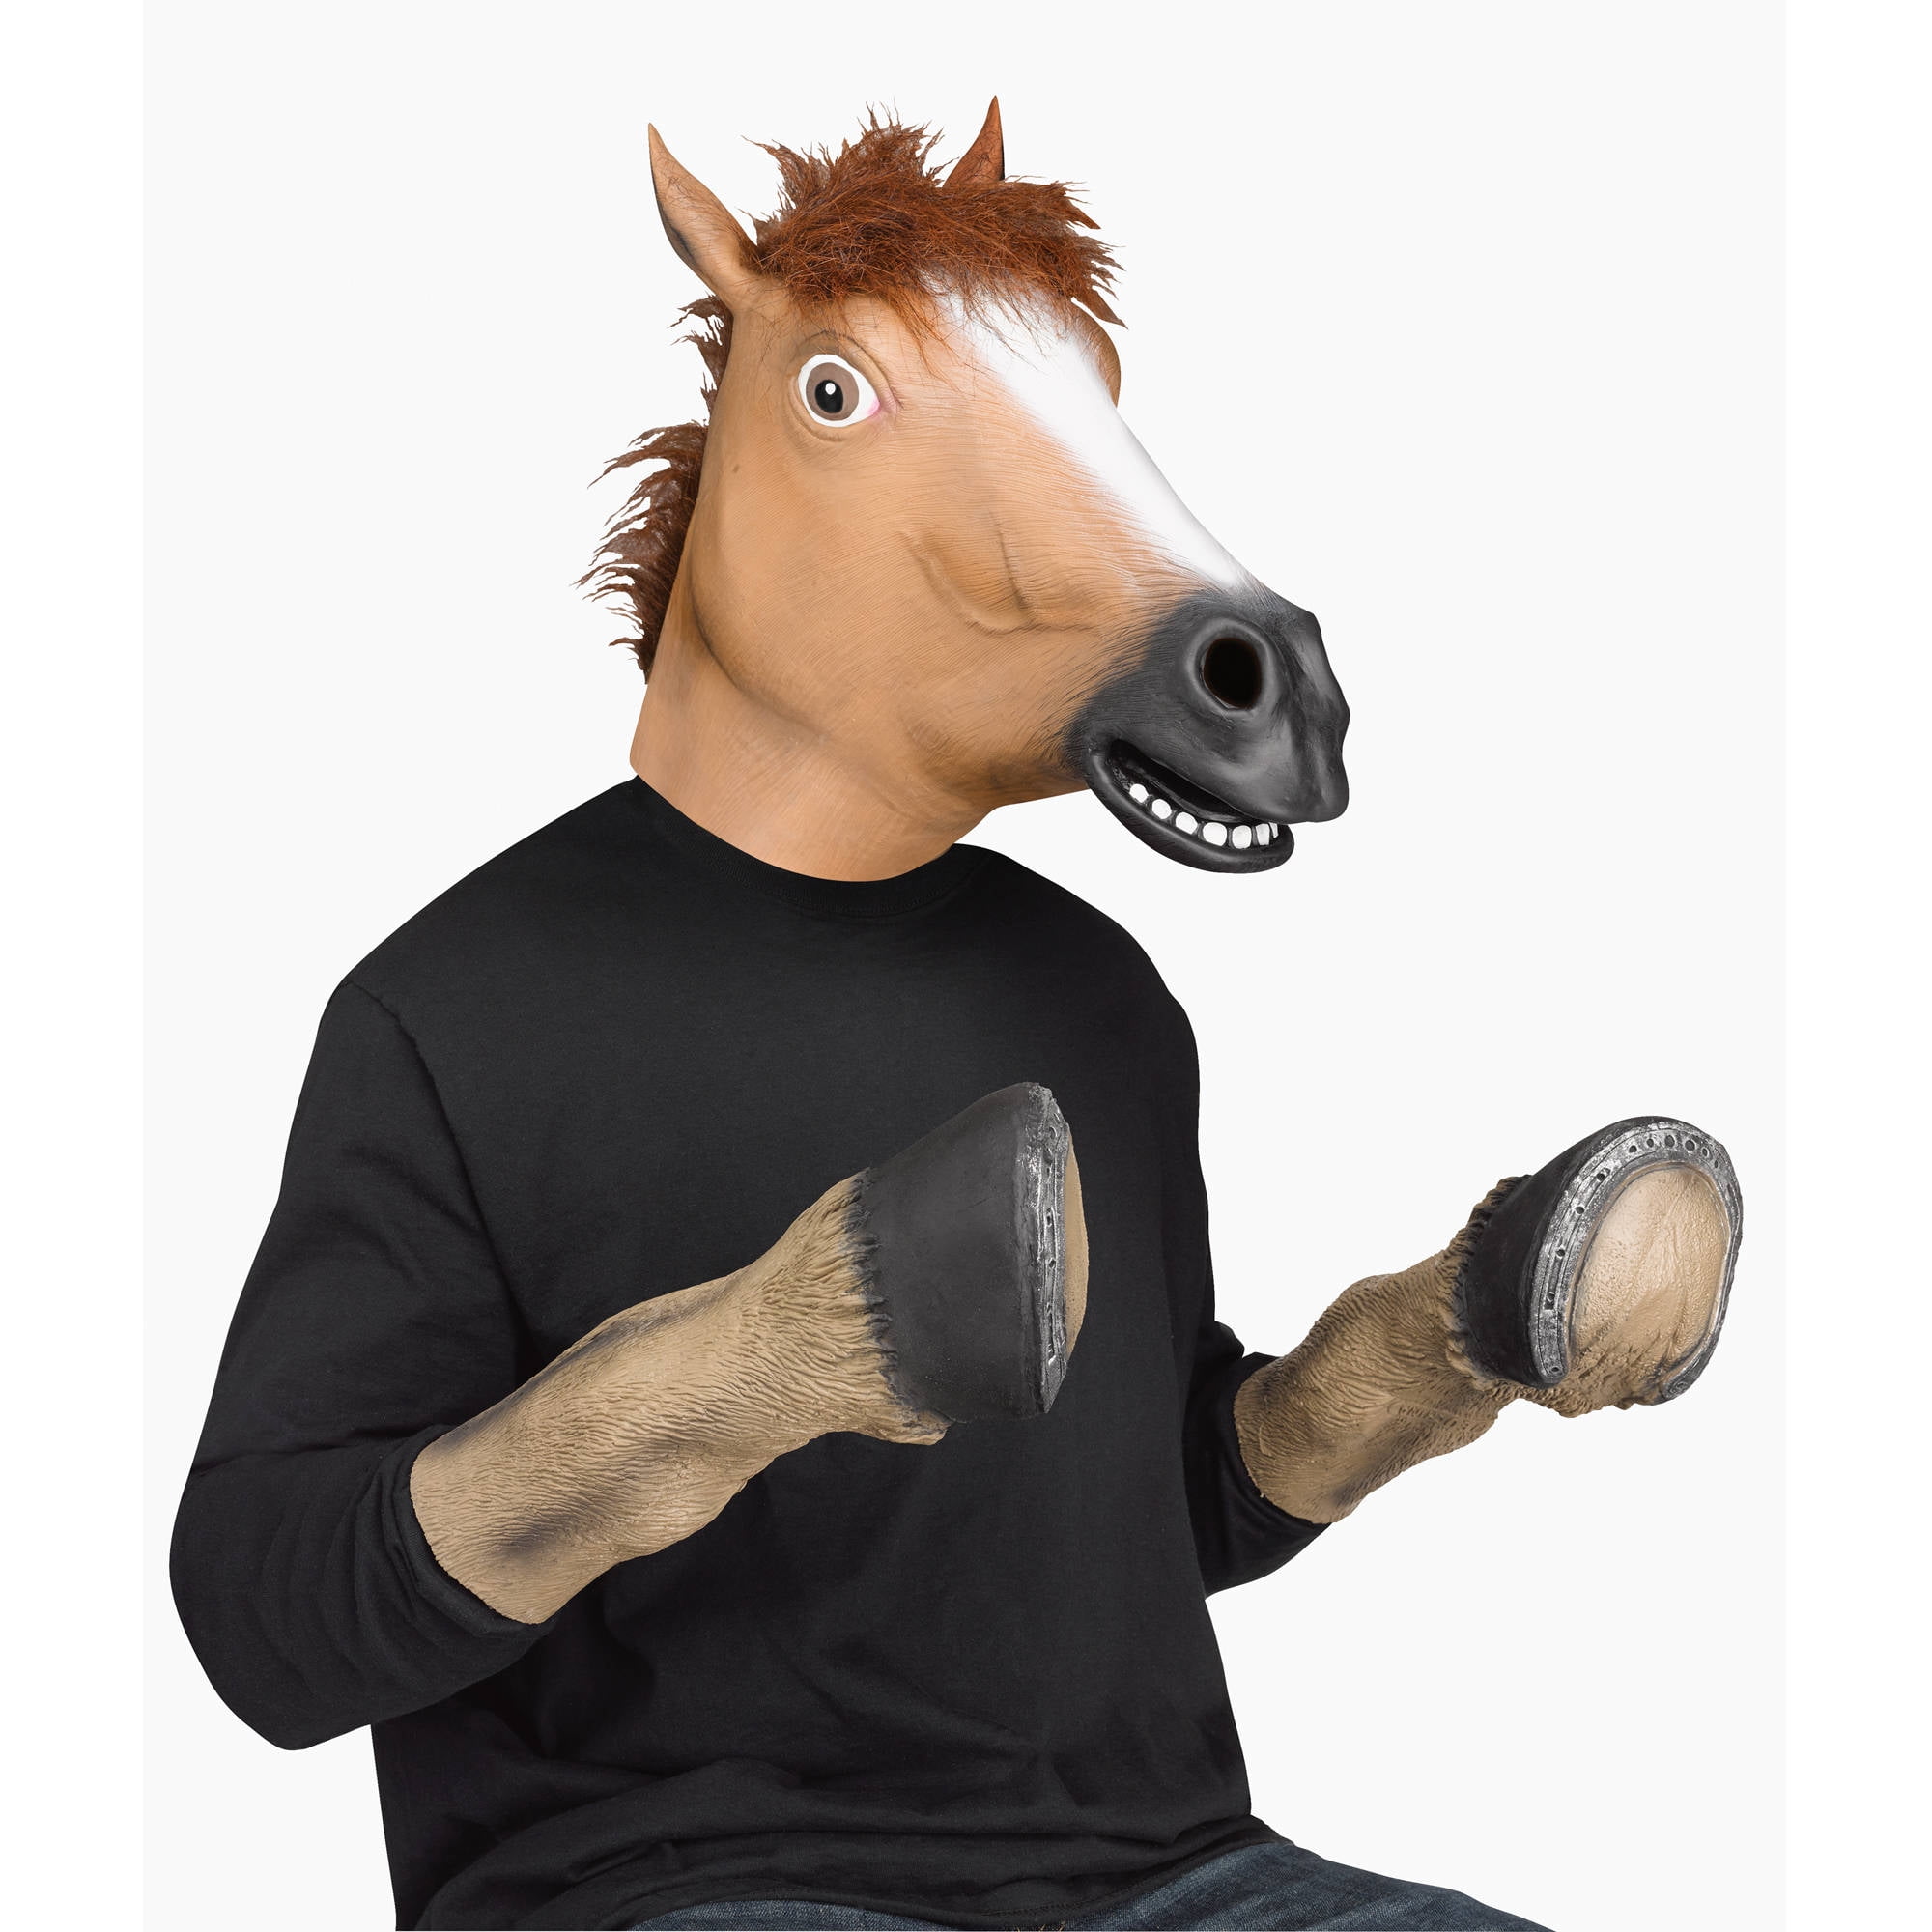 Prime Scully ønskelig Fun World Horse Head Mask Adult Halloween Accessory - Walmart.com